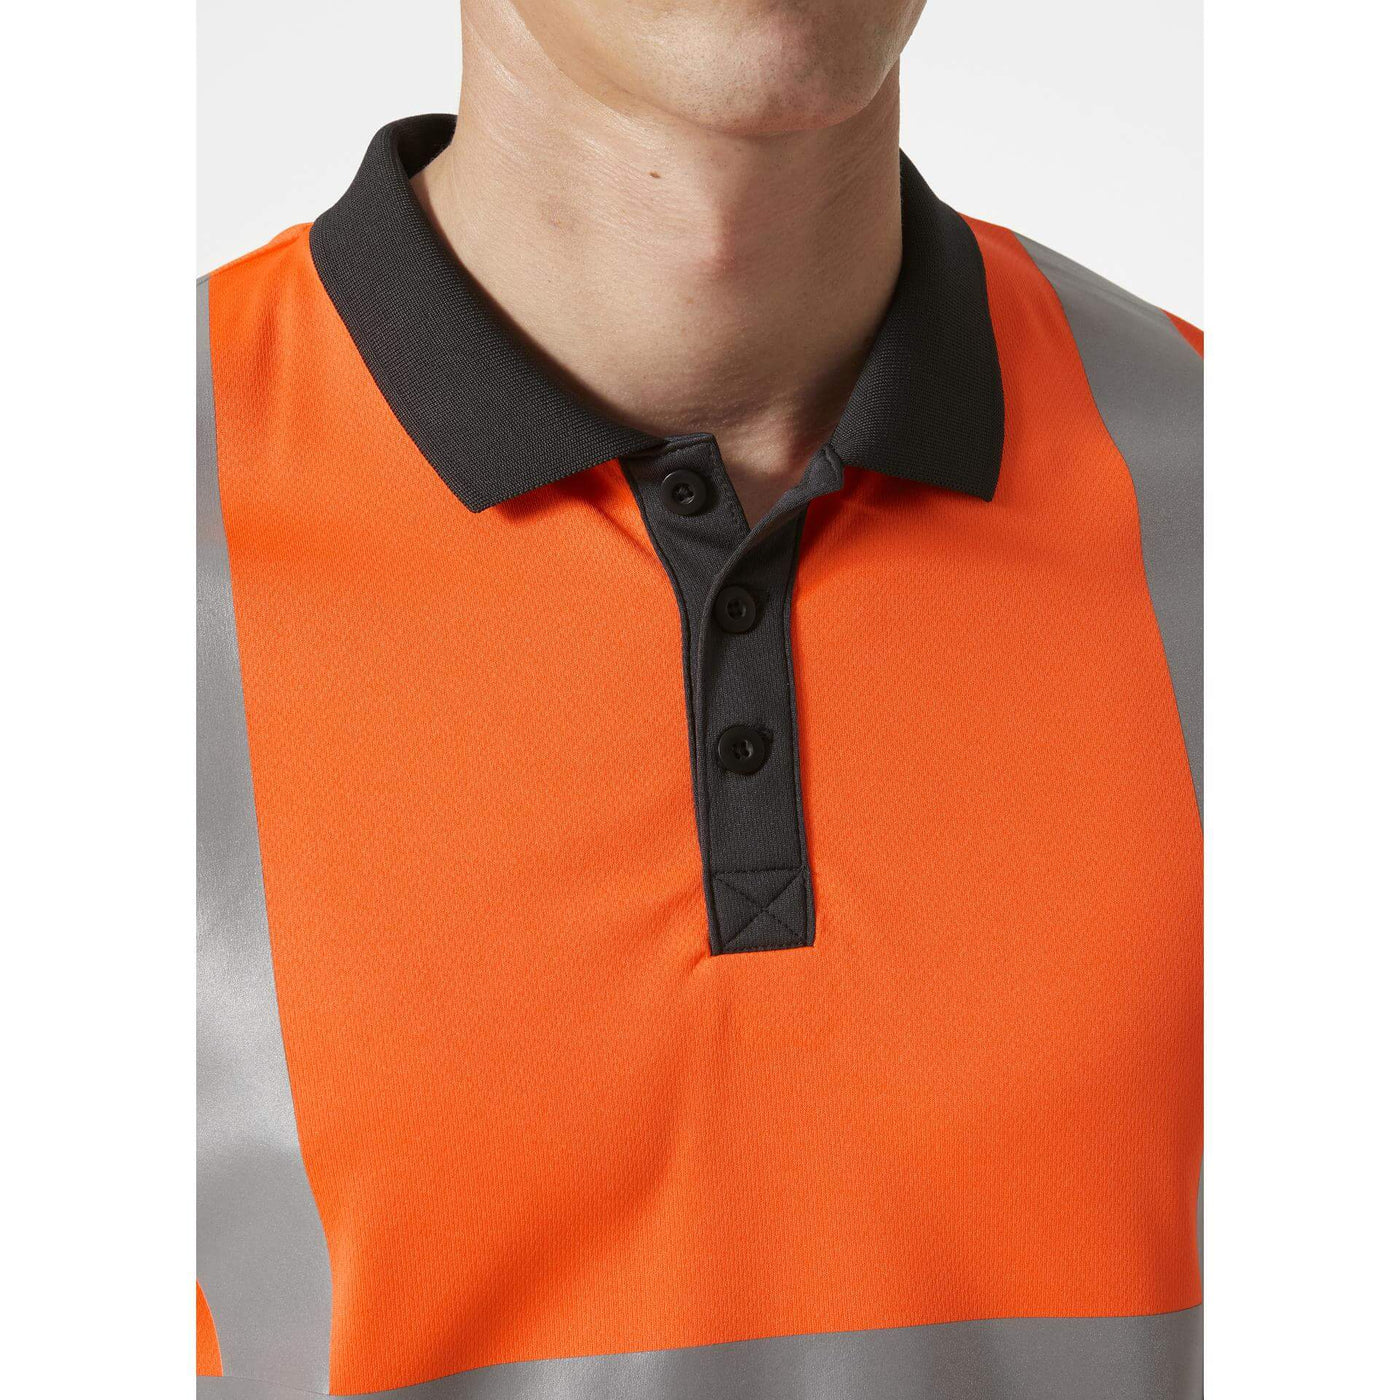 Helly Hansen Addvis Hi-Vis Polo Shirt Class 1 Orange/Ebony Feature 2#colour_orange-ebony